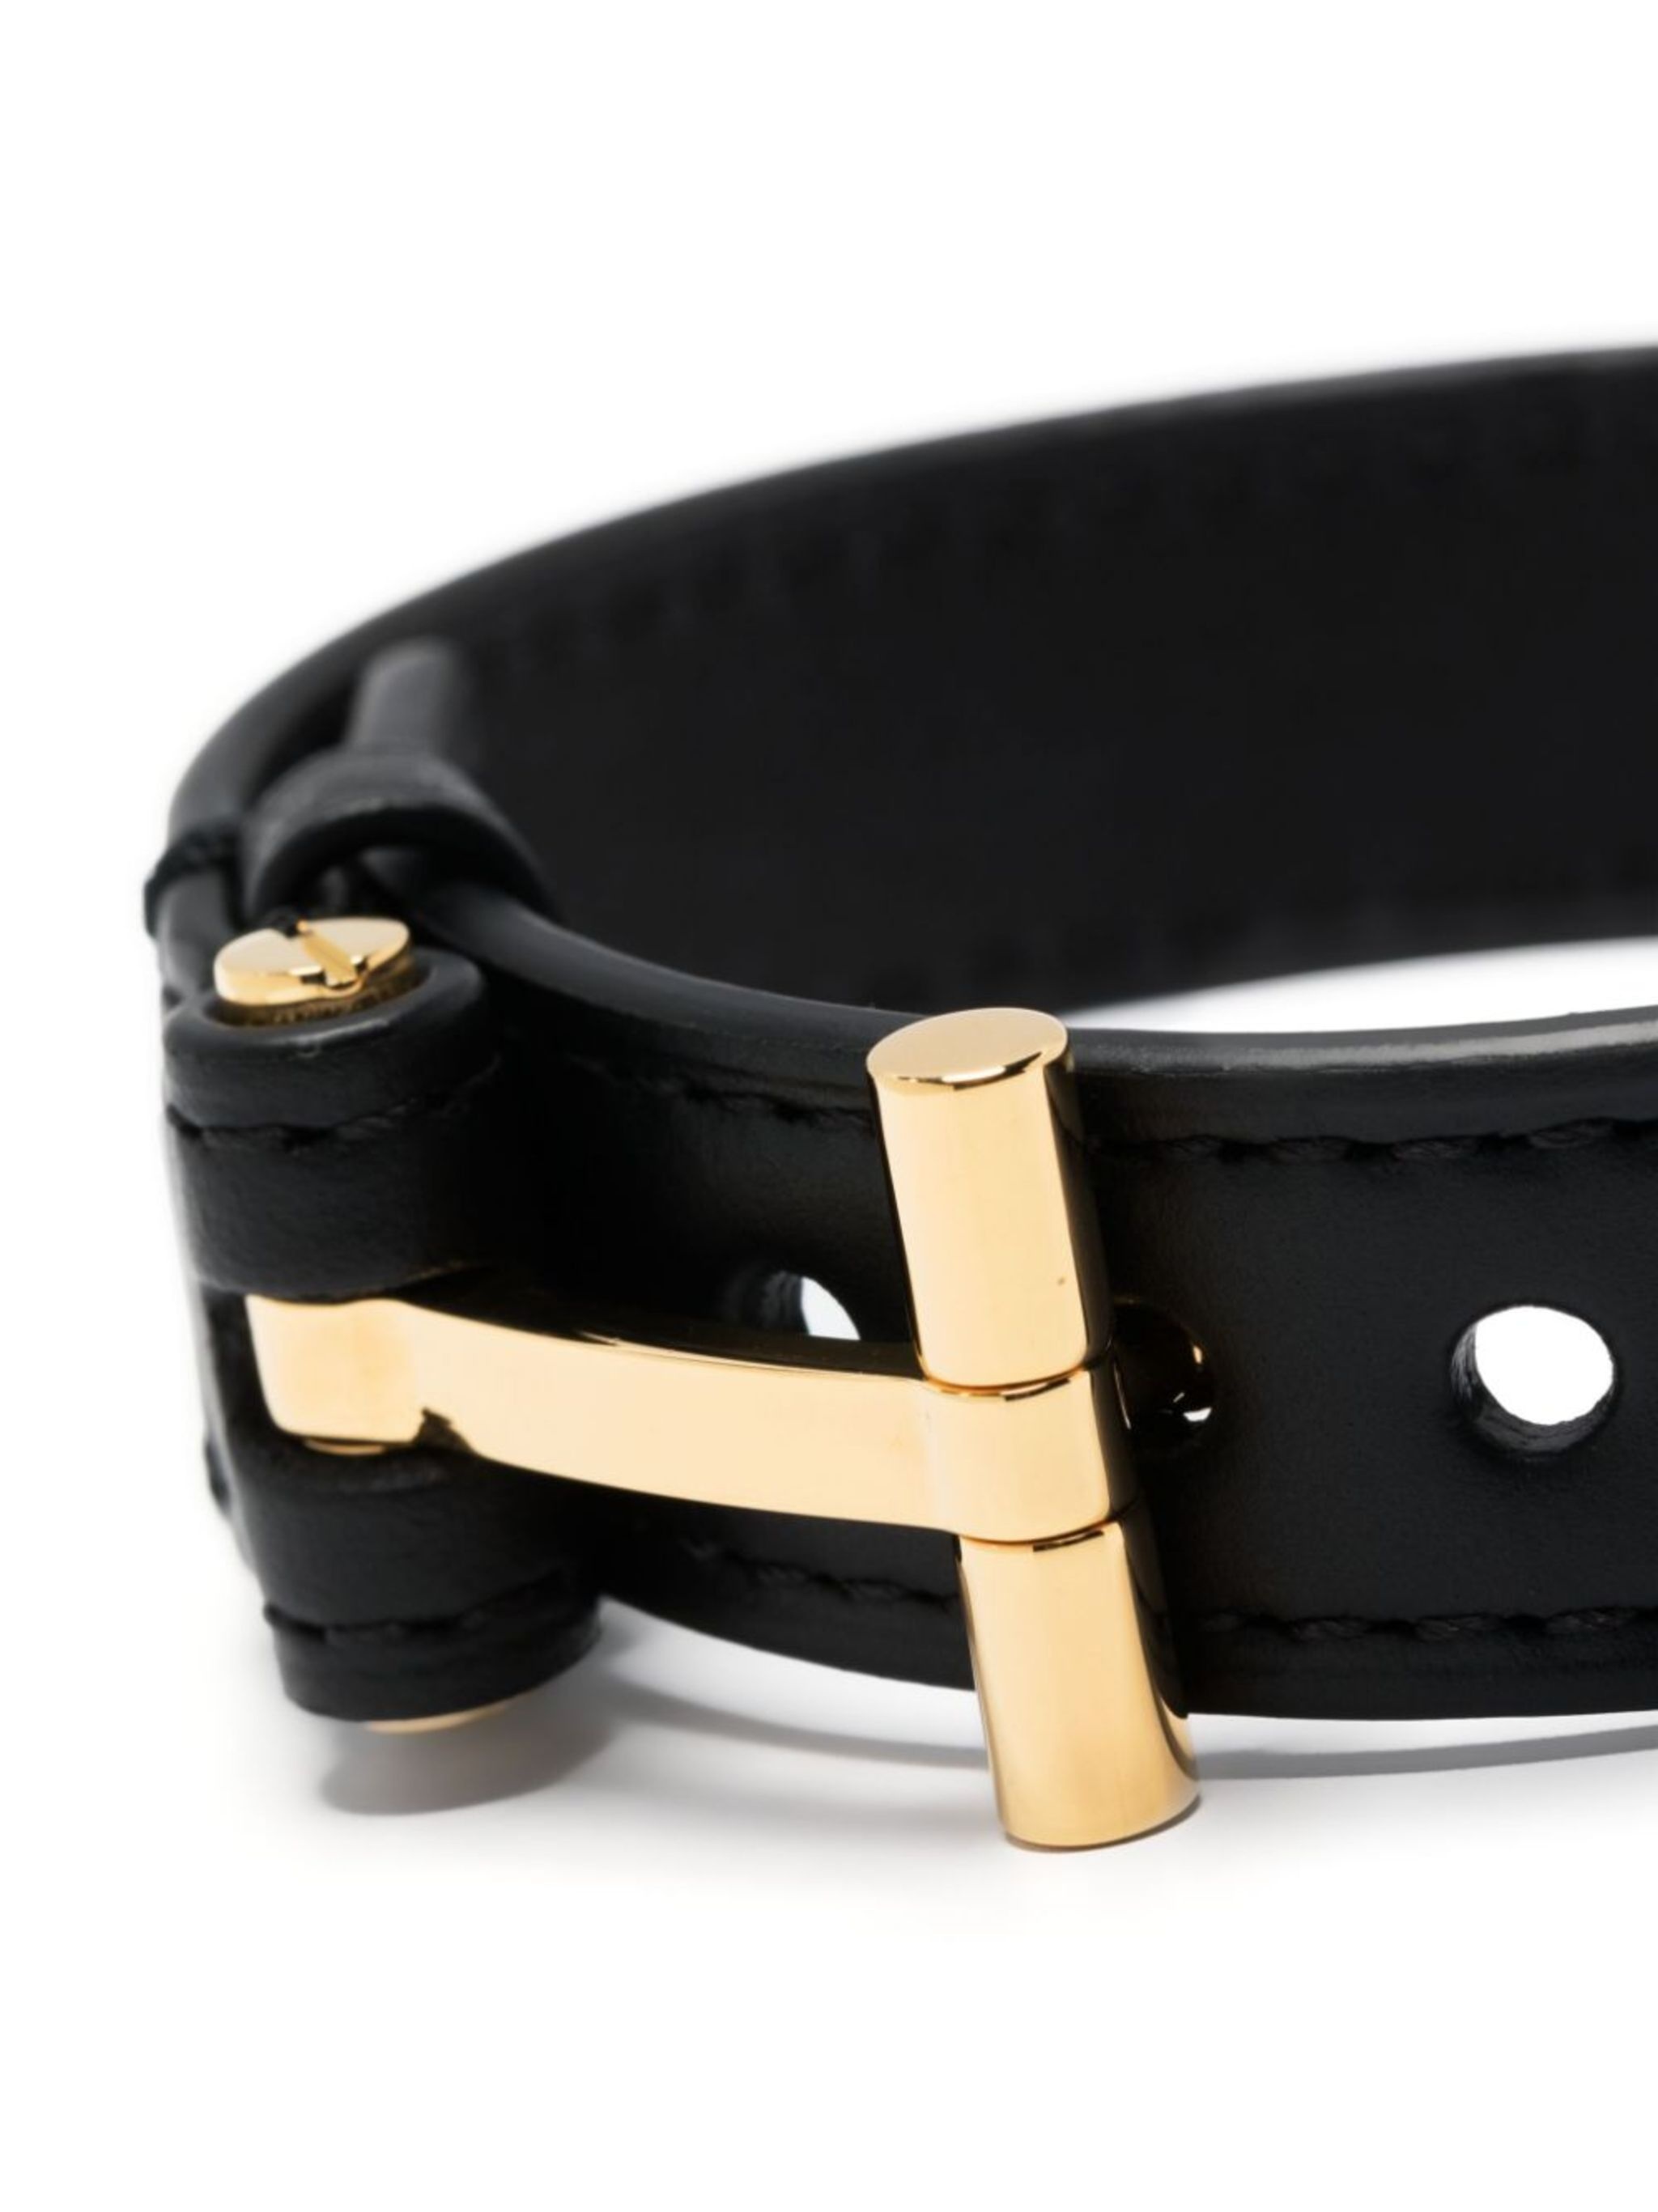 T-hinge leather bracelet - 3